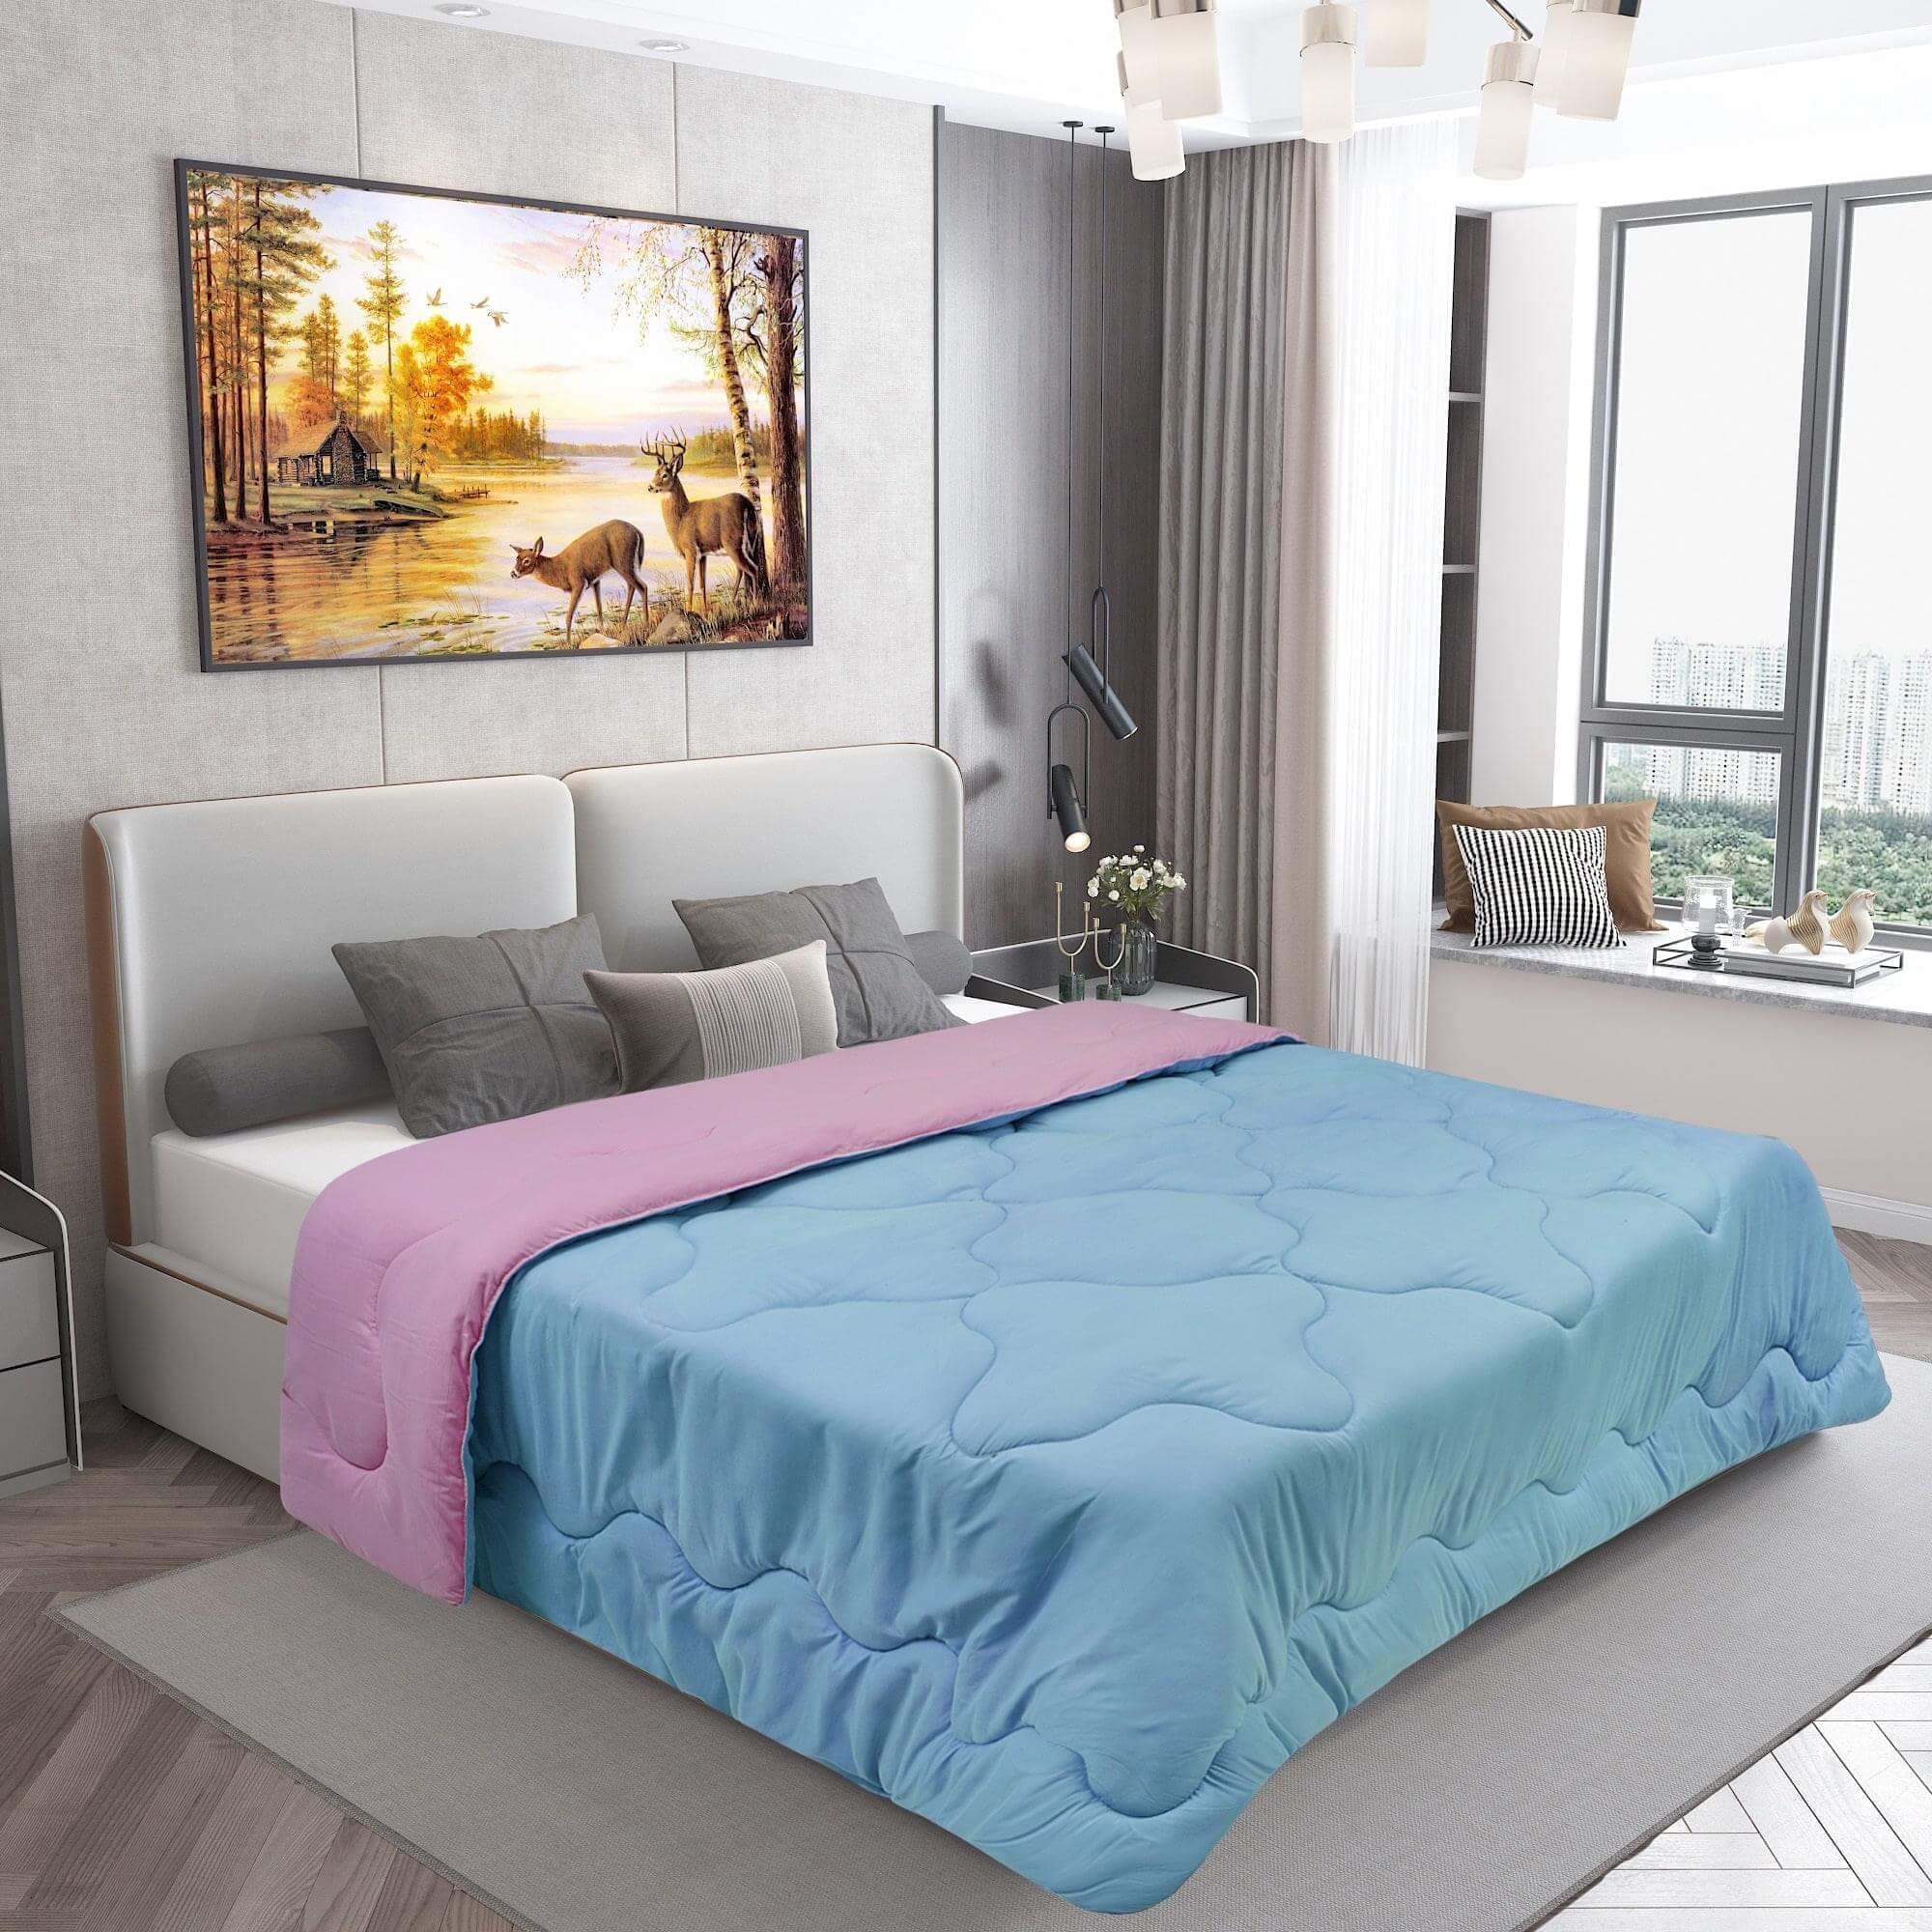 AC Comforter Blanket, Microfiber Reversible (Baby Blue, Pink)